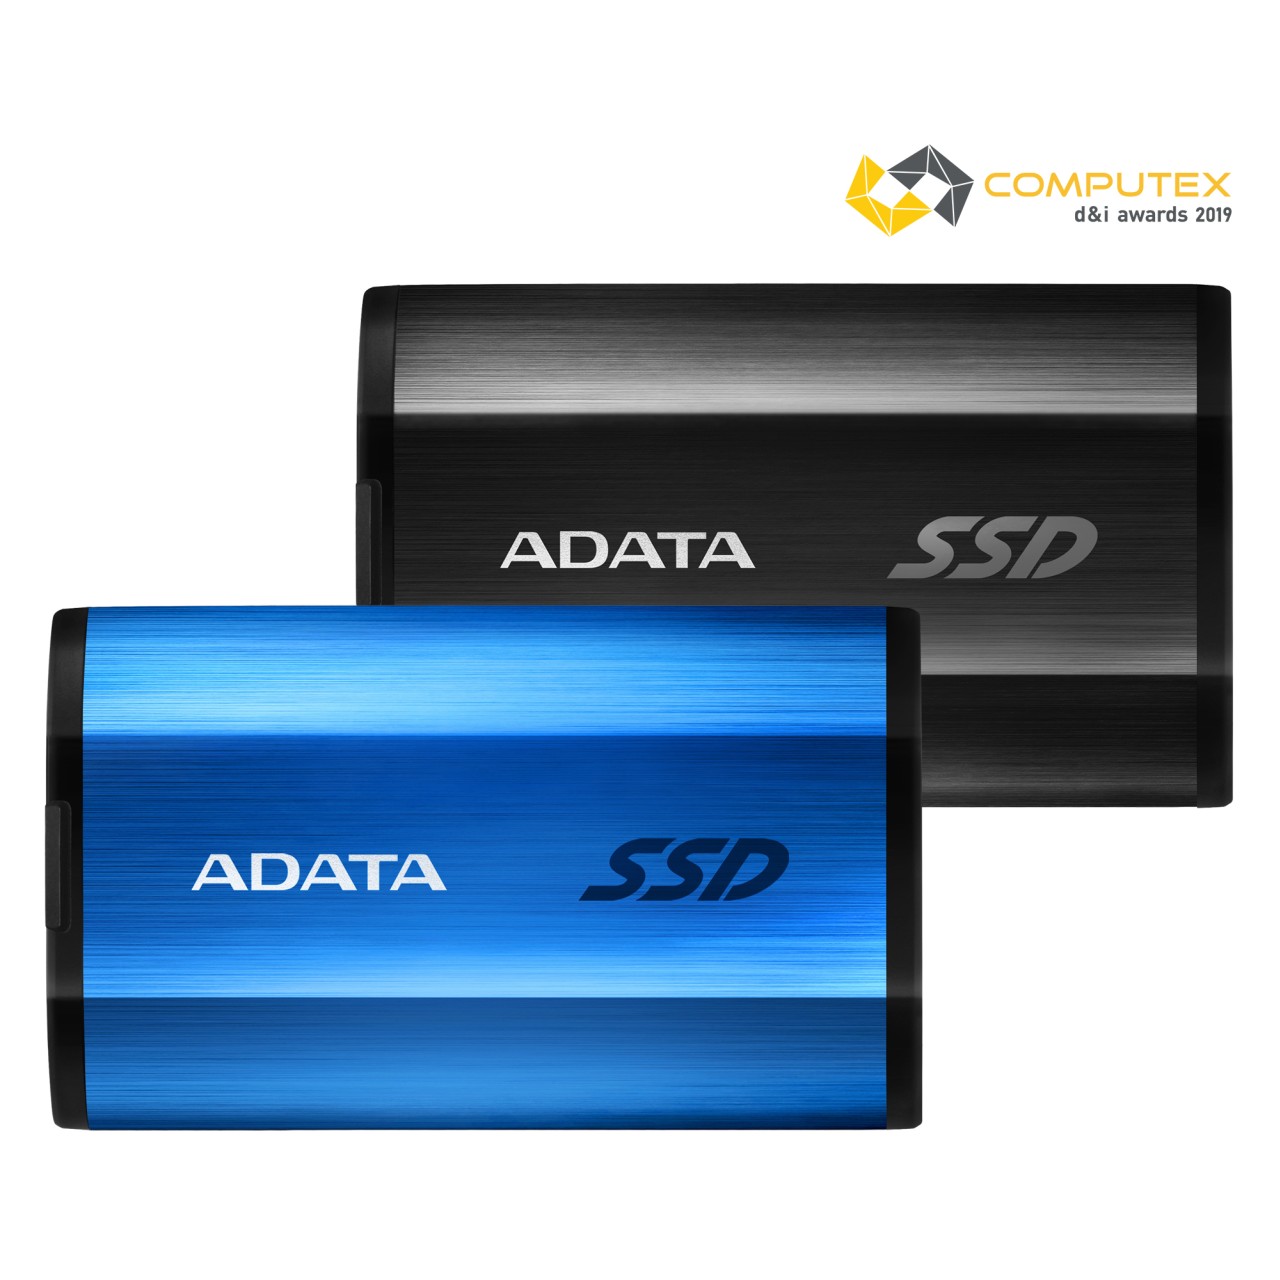 ADATA meluncurkan SE800 USB 3.2 Gen 2 SSD eksternal dengan USB 3